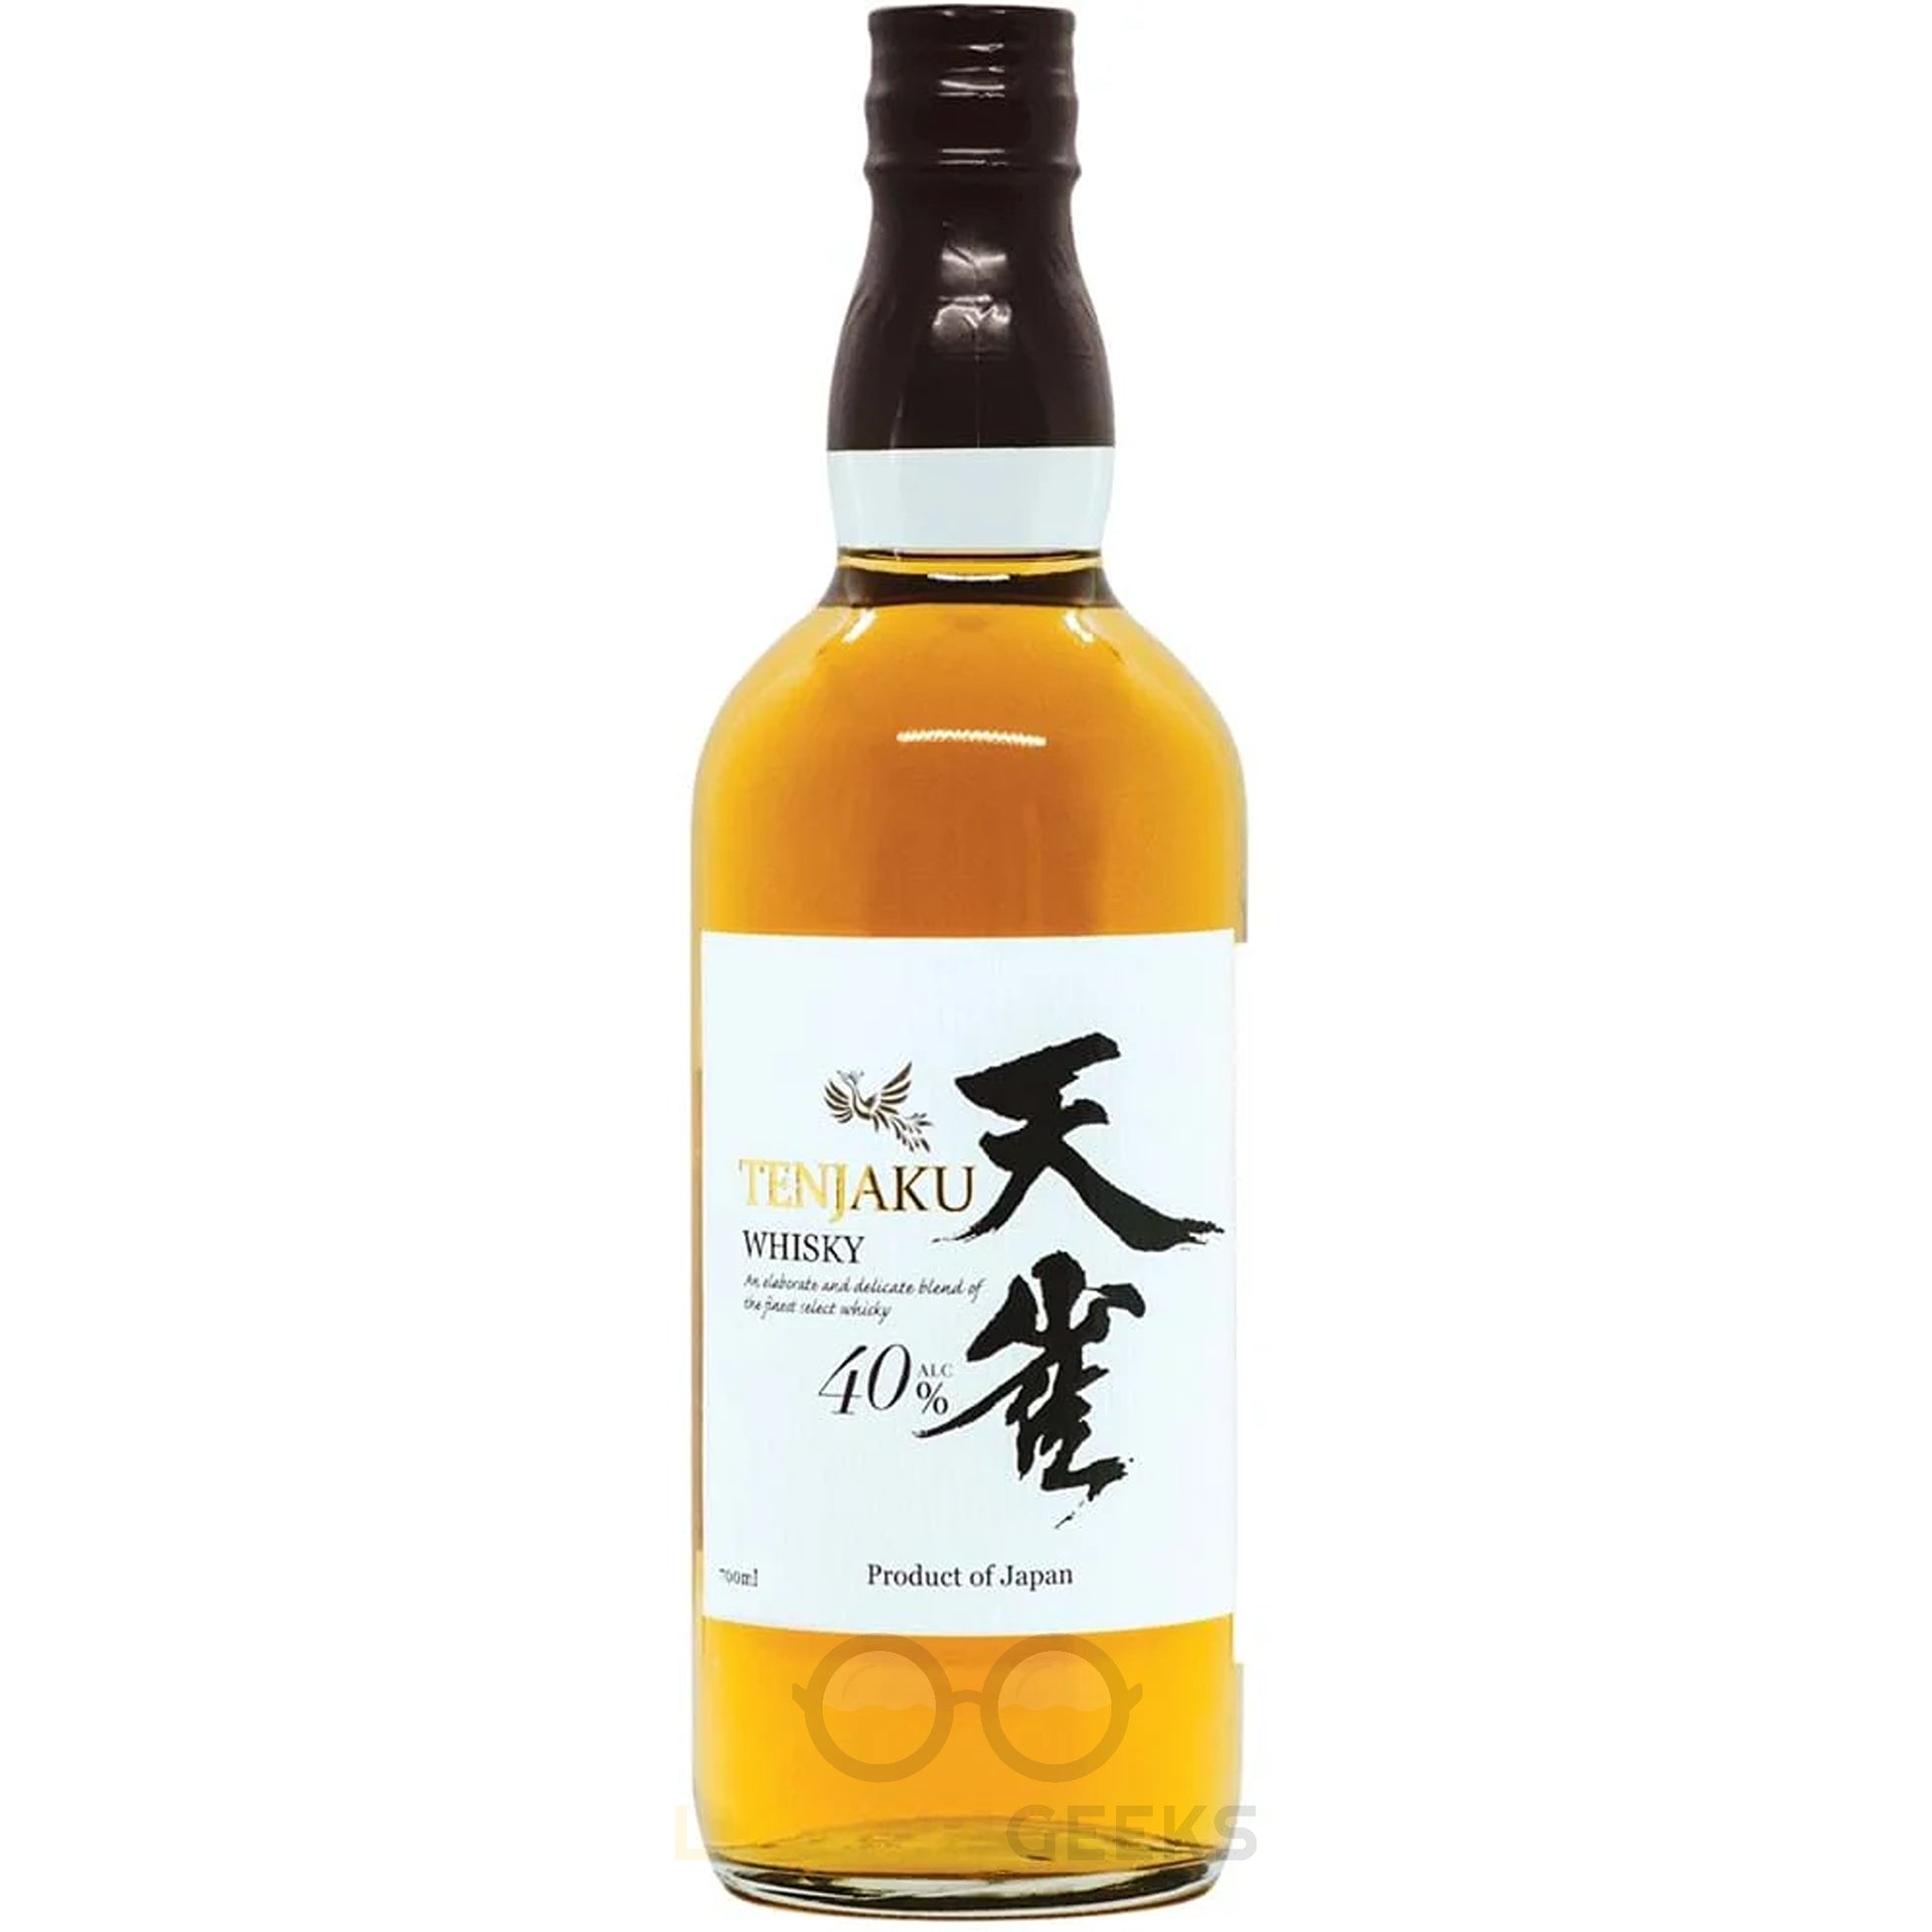 Tenjaku Japanese Whisky - Liquor Geeks